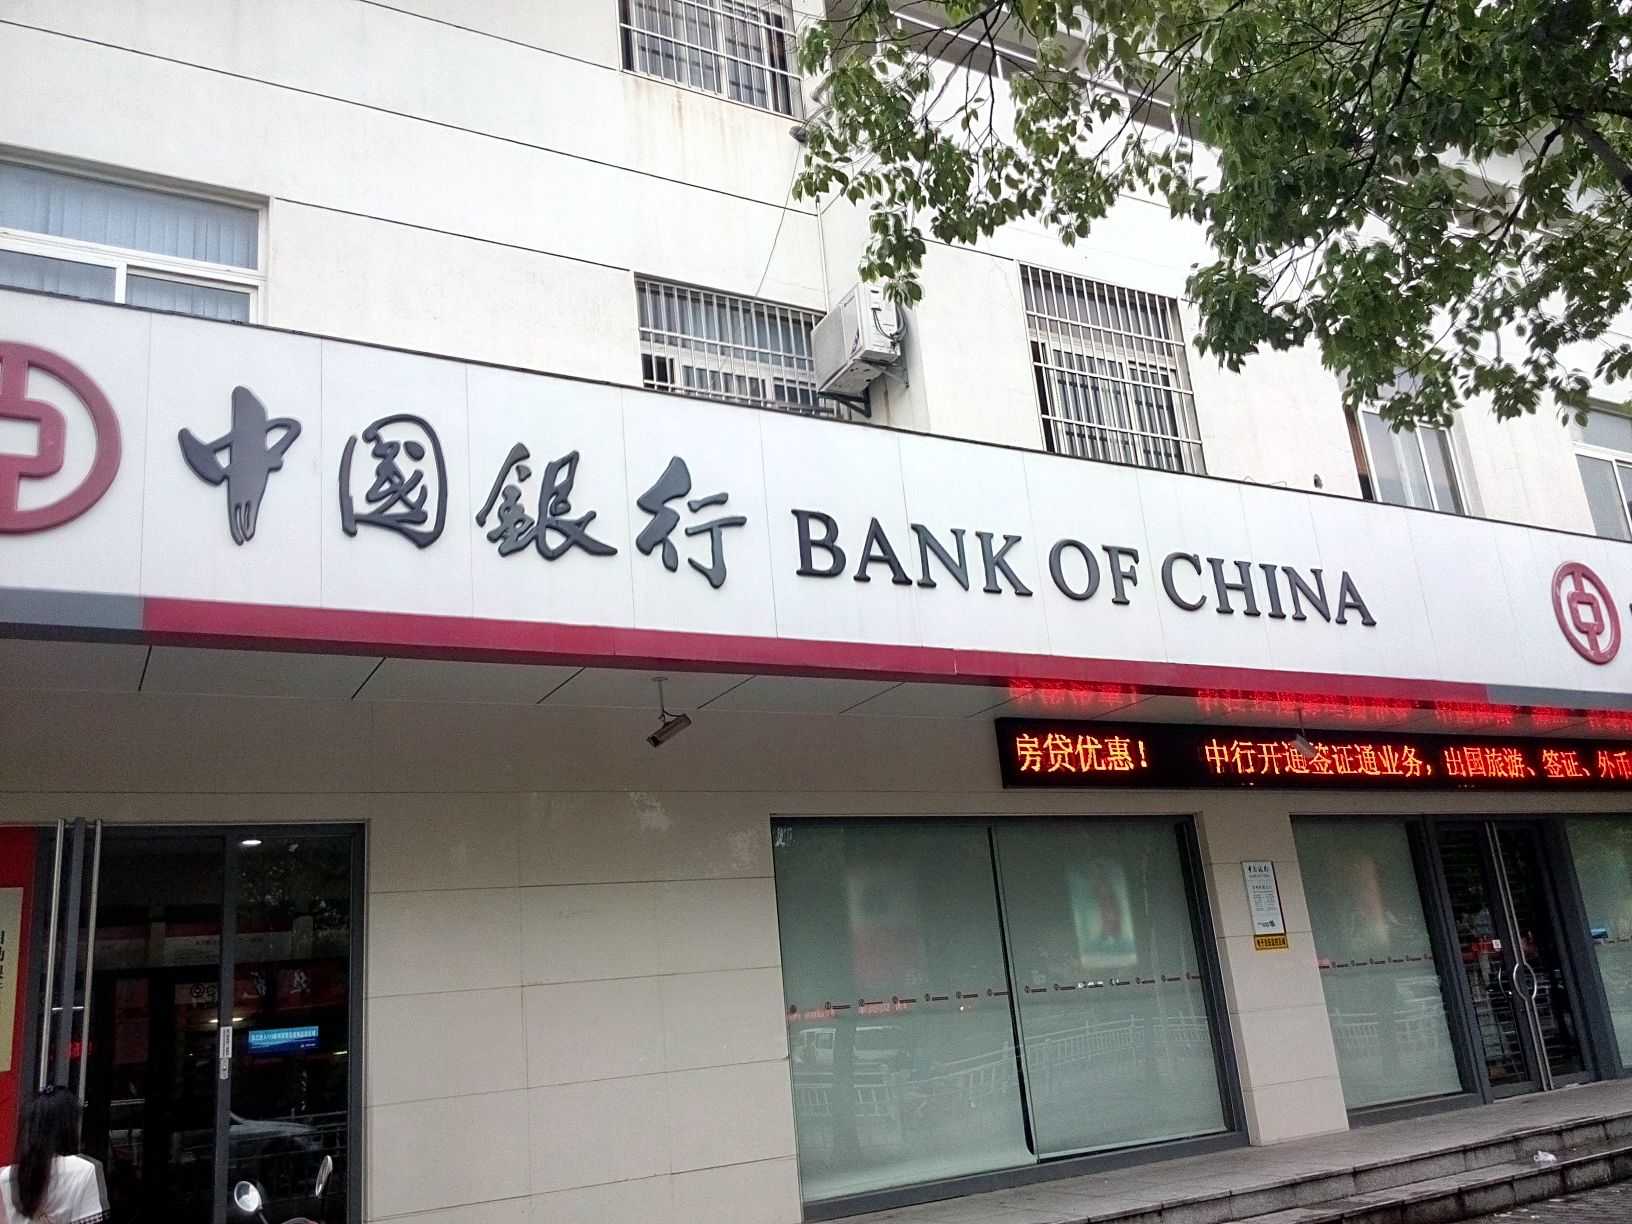 Cnaps bank of china. Банк Китая. Китайские банки. Банк оф чина. Китайские банки в России.